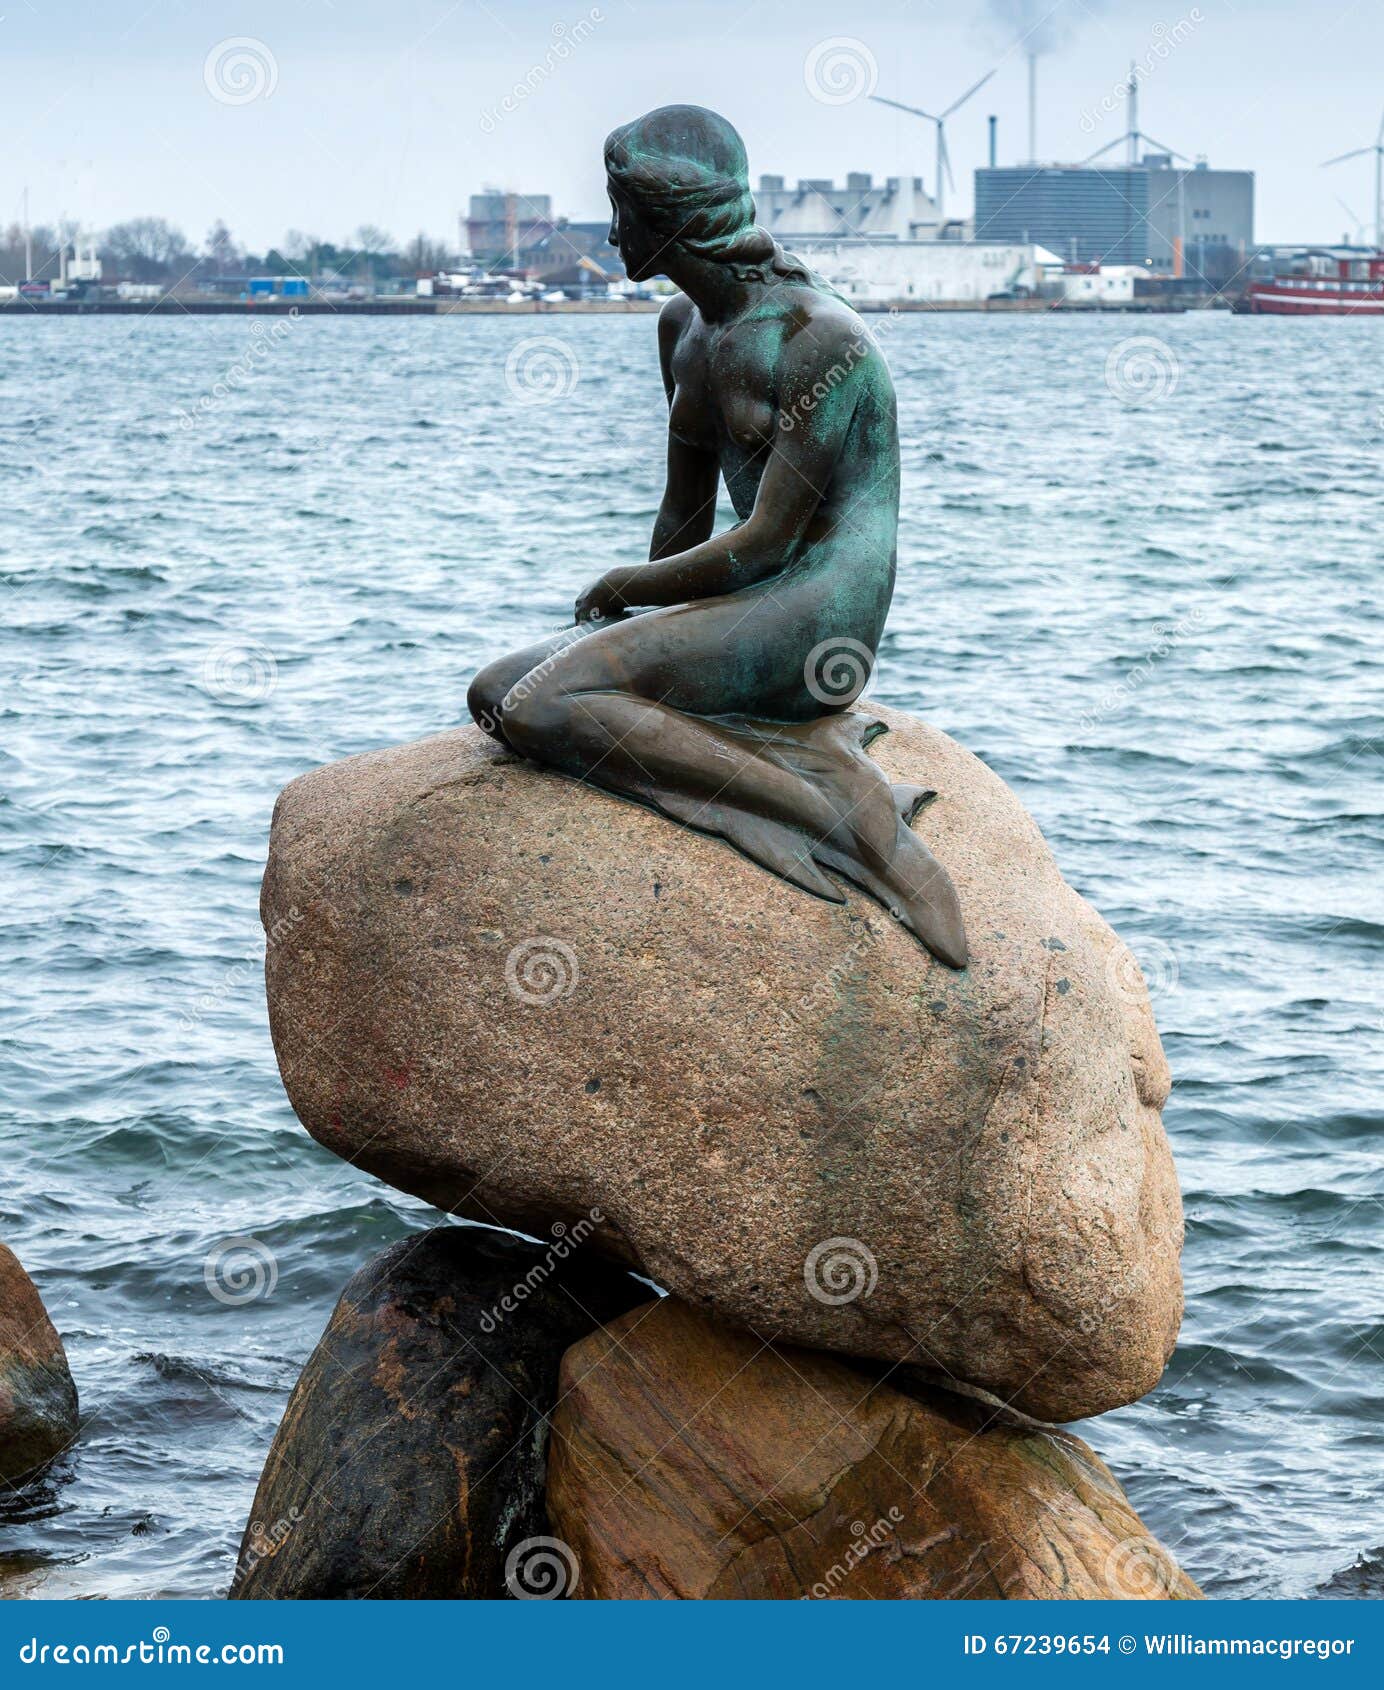 Little Mermaid Copenhagen editorial stock image. Image of sculpture ...